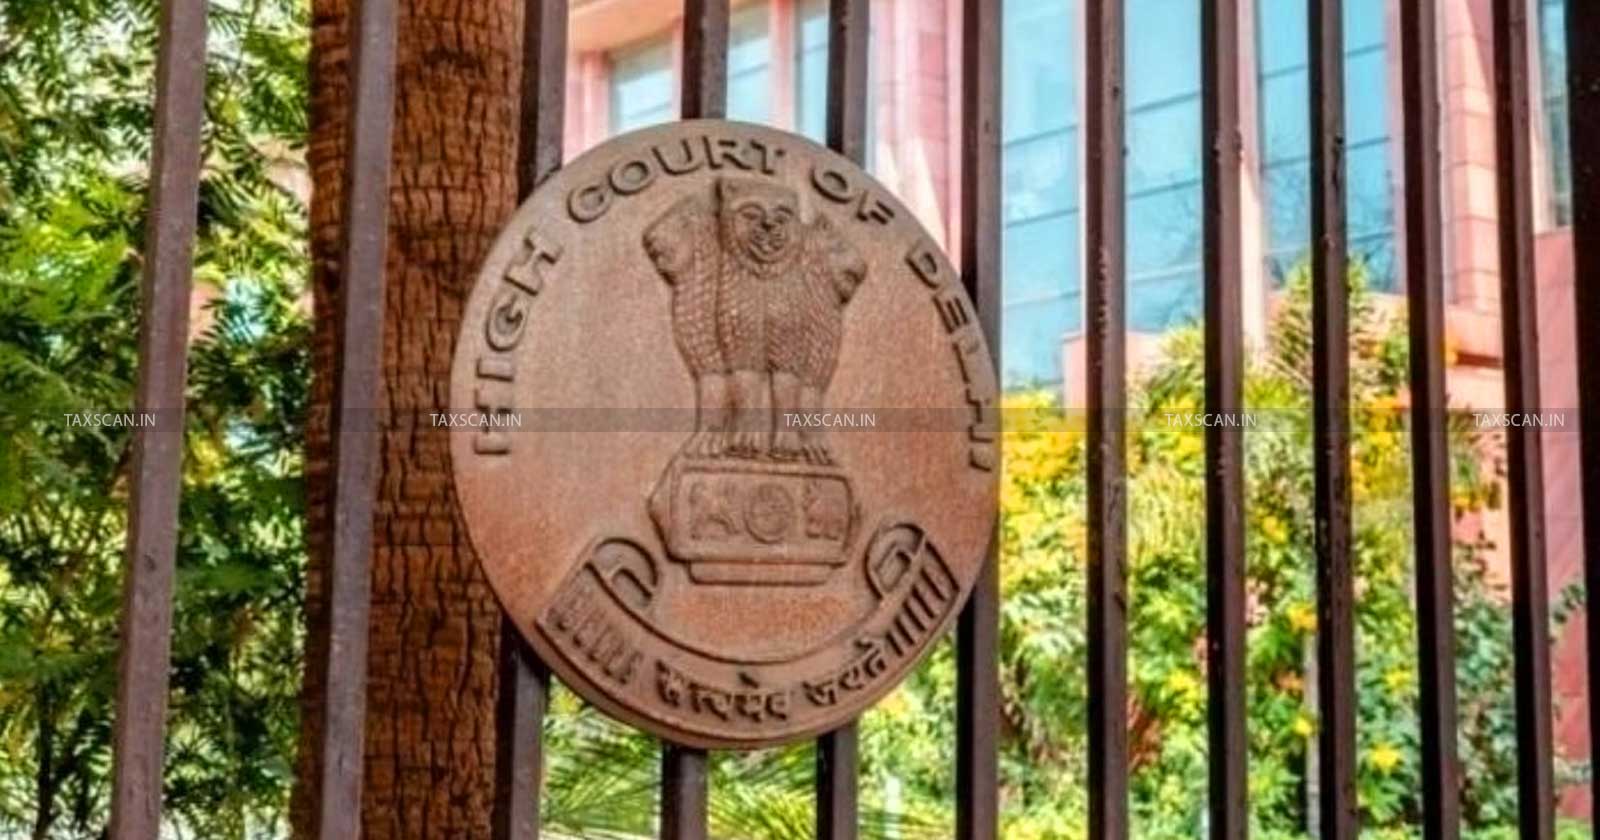 Delhi High Court - Delhi HC - Provisional Liquidator role - Allegations against Companies - Cases against companies - Taxscan